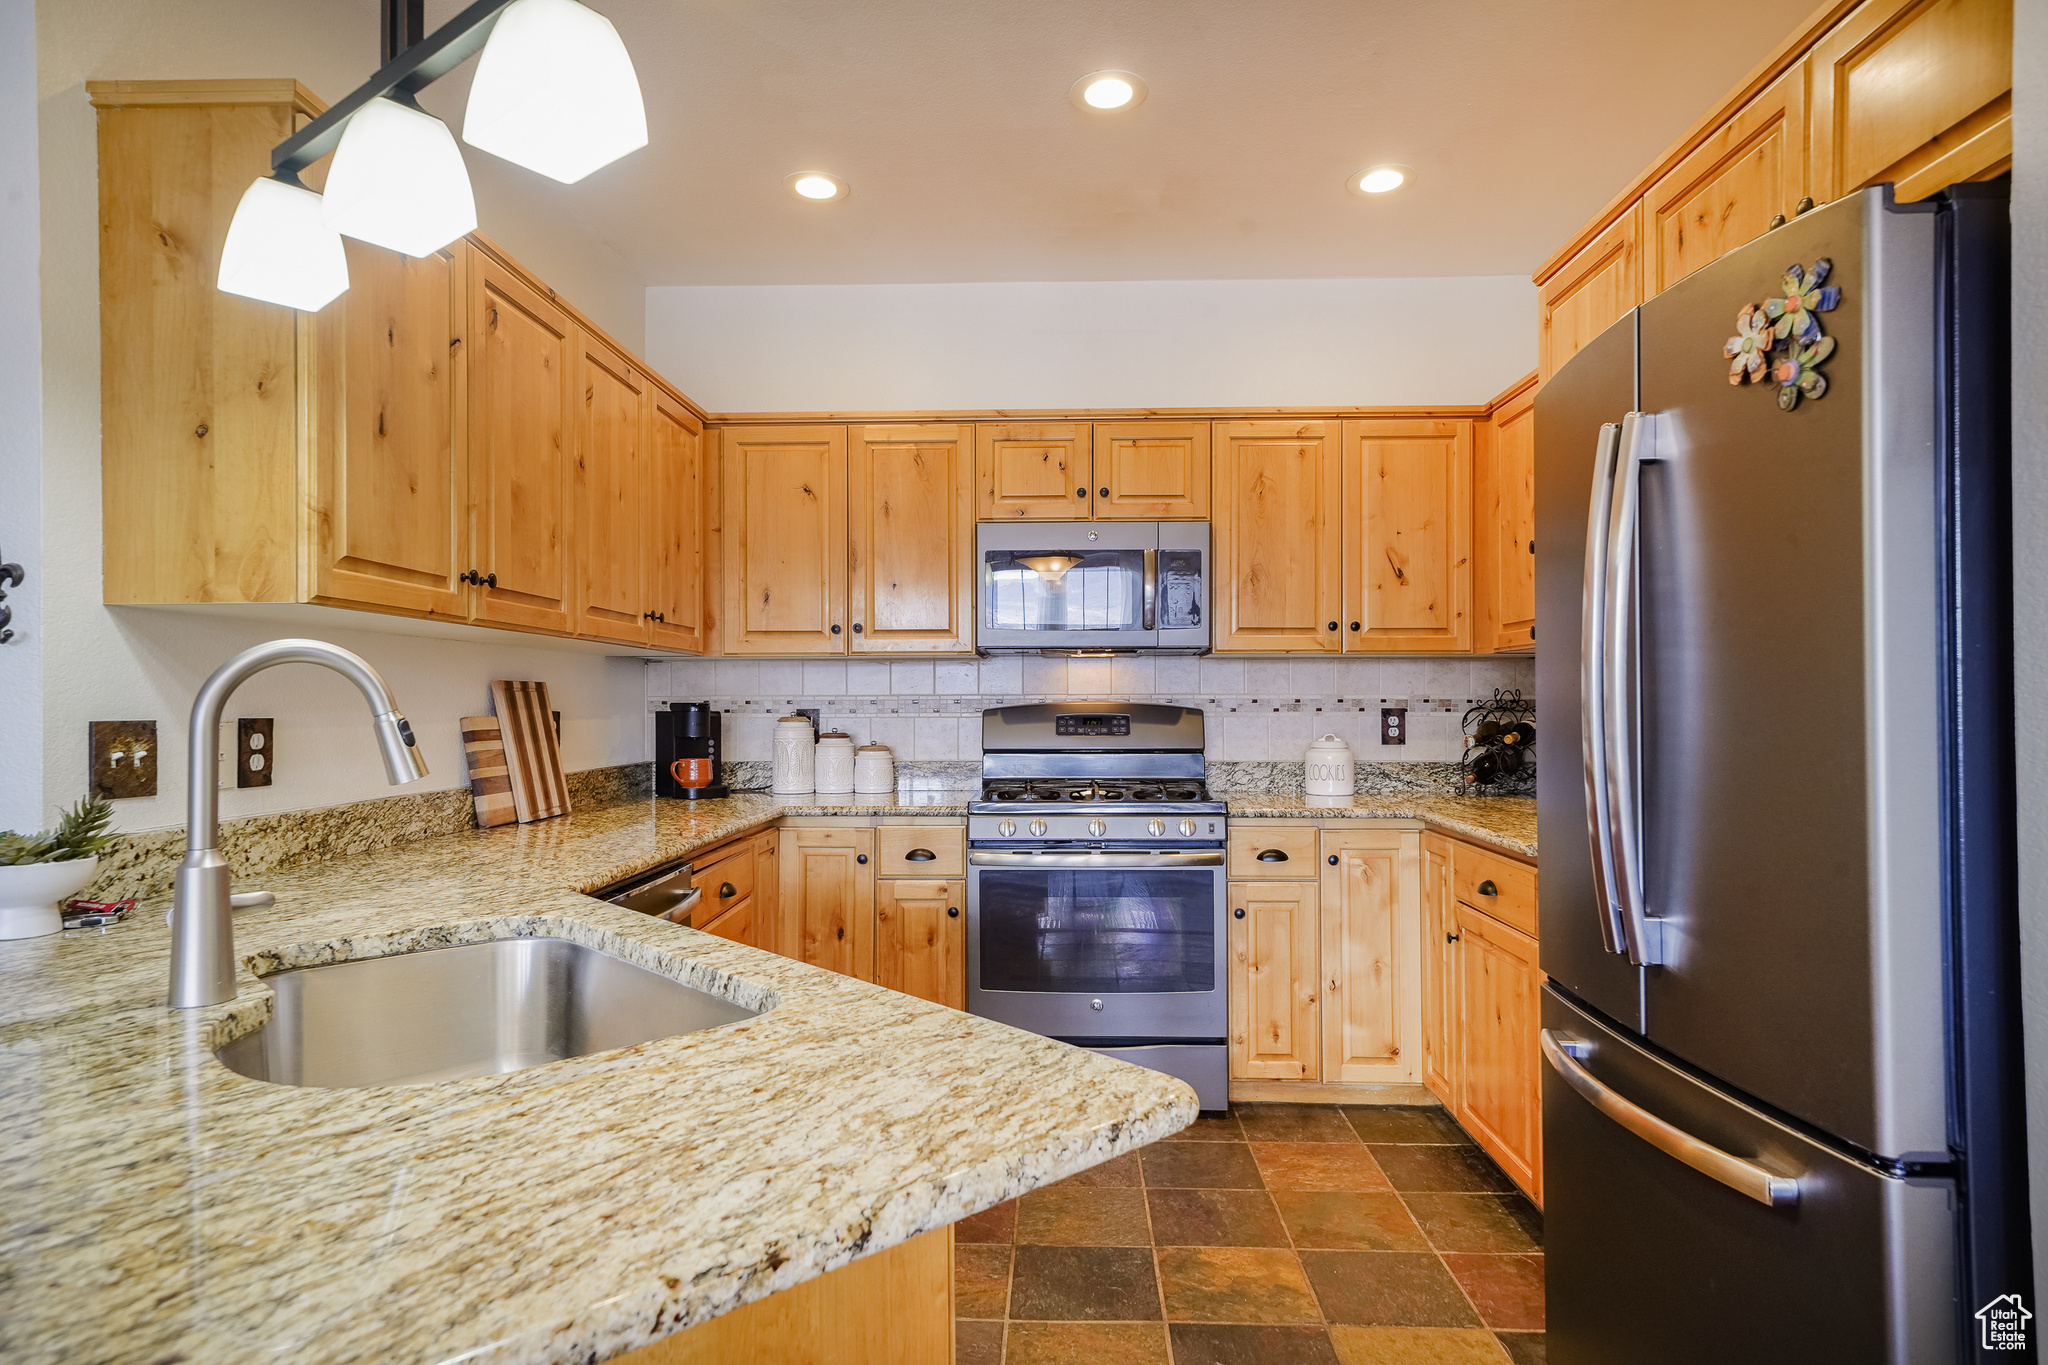 Kitchen featuring dark tile floors, tasteful backsplash, stainless steel refrigerator, sink, and range with gas cooktop